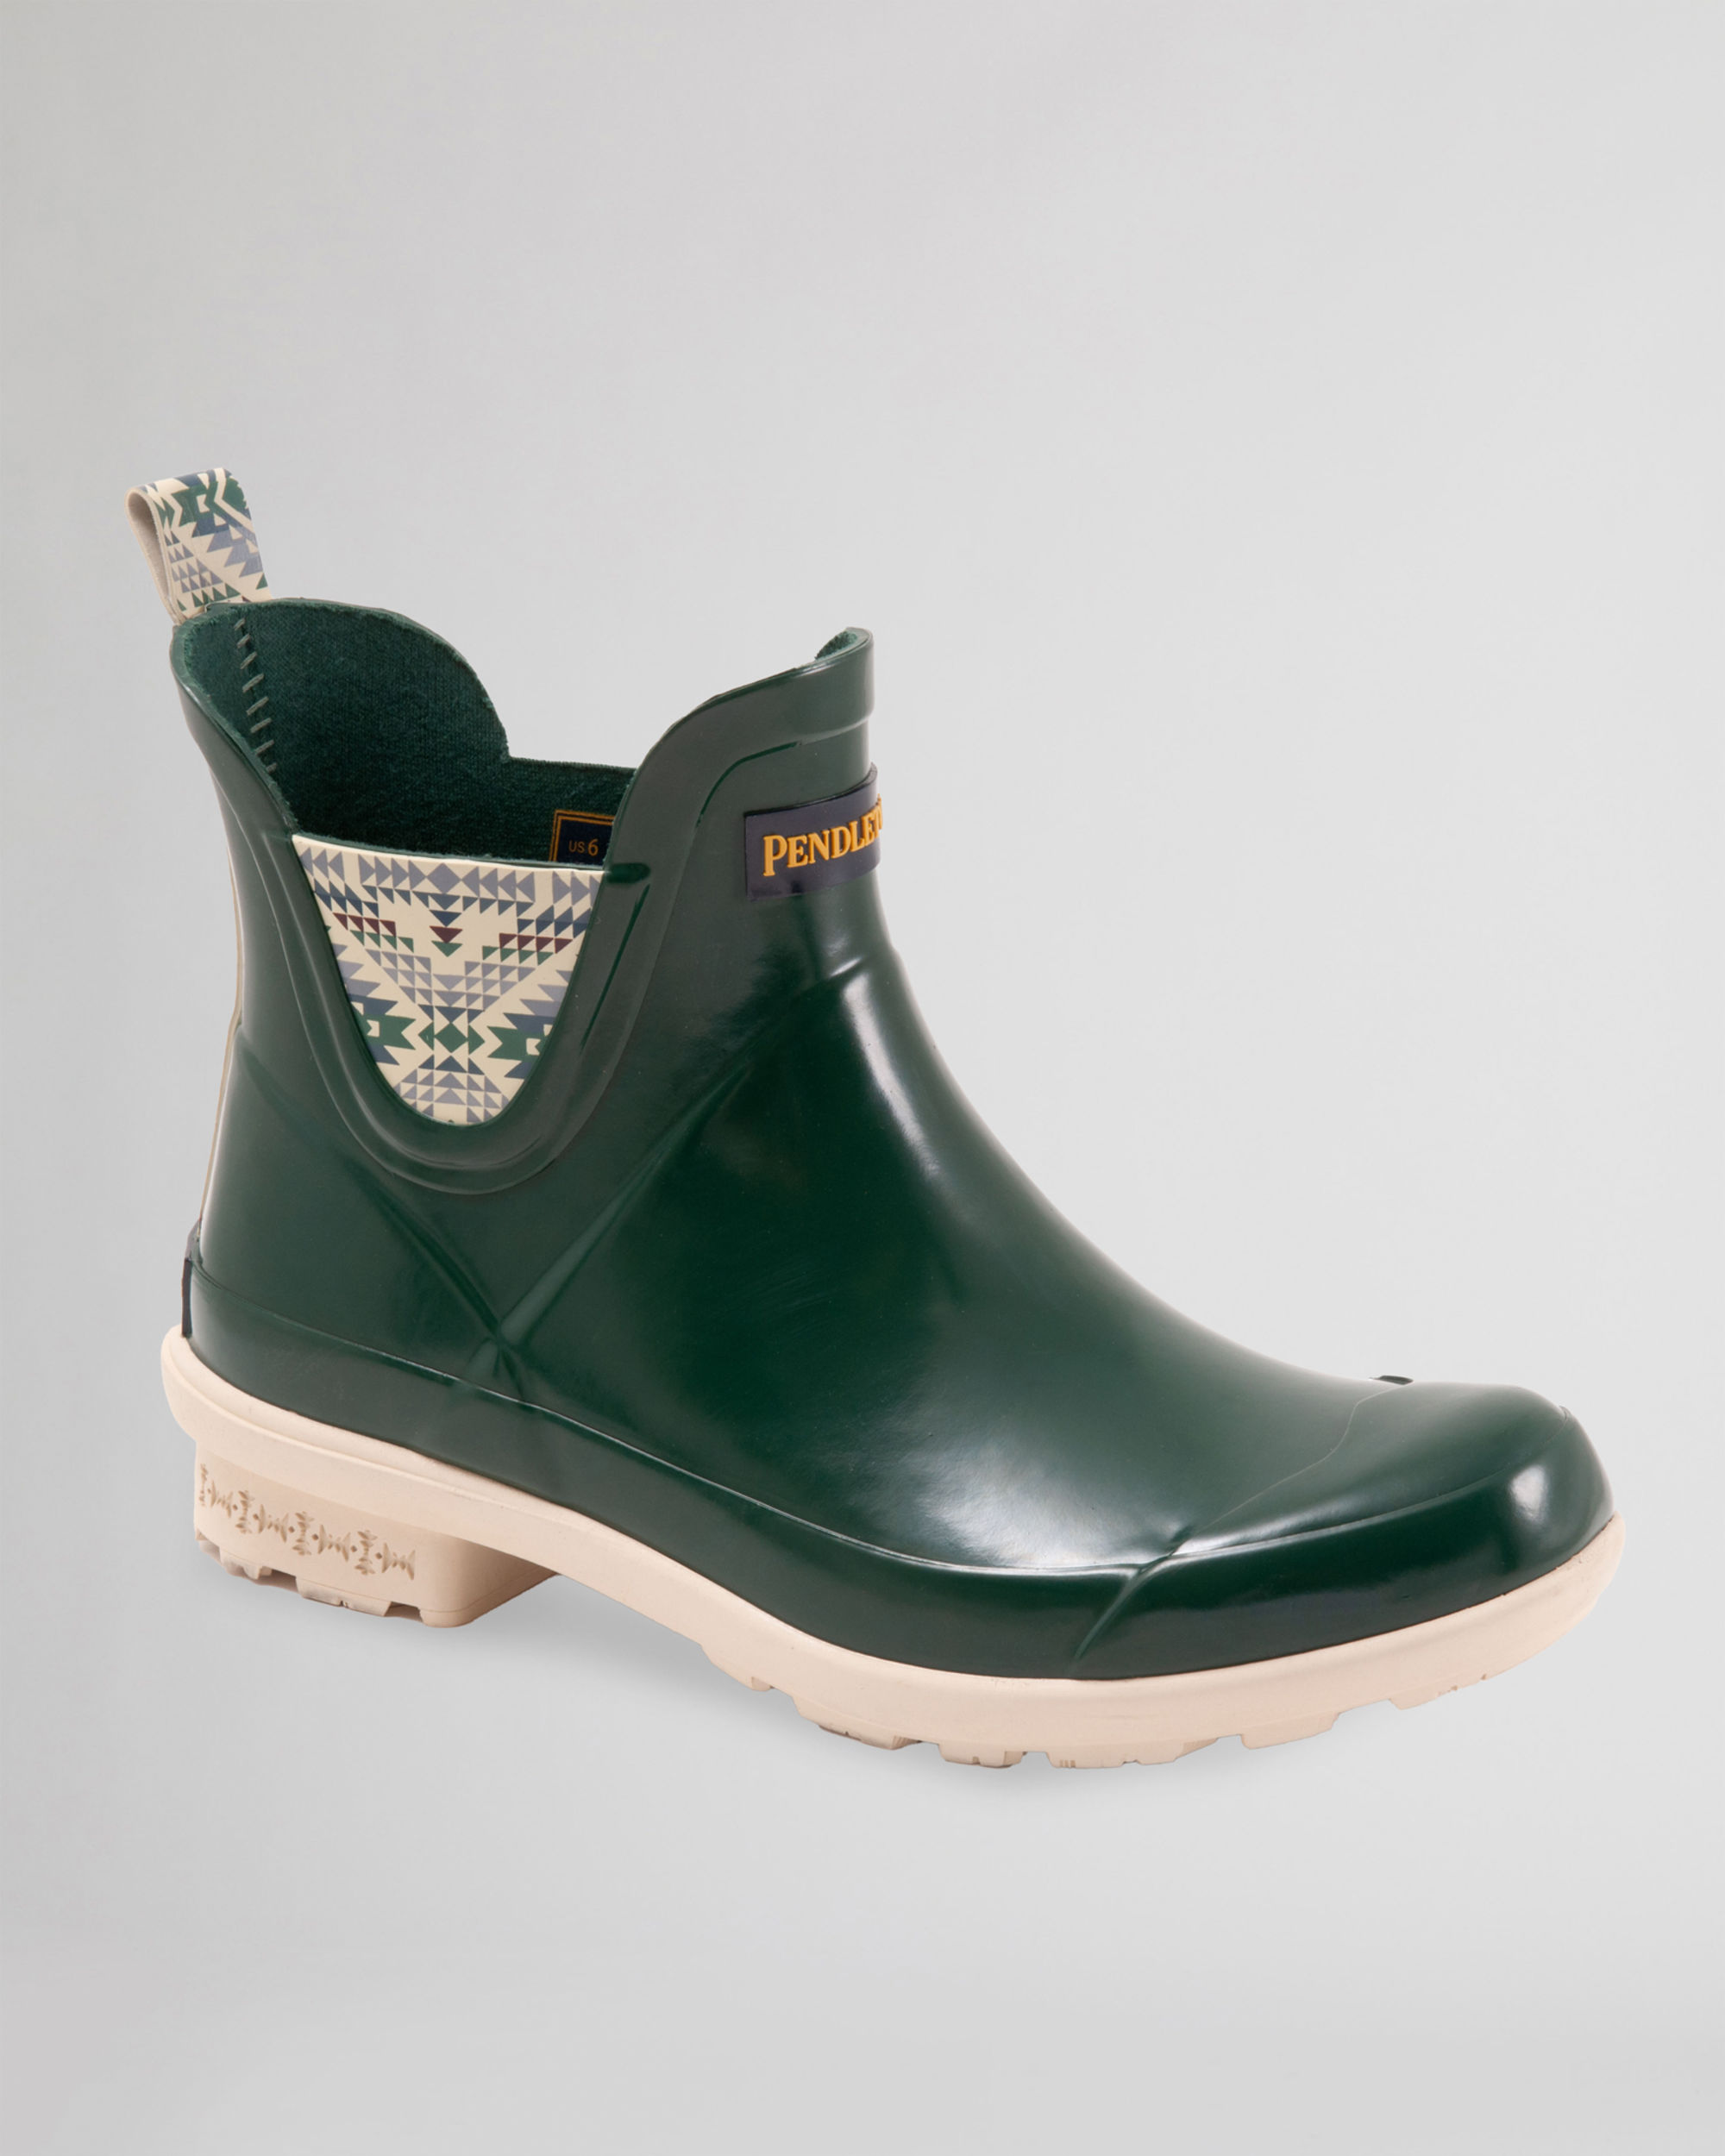 at tilbagetrække Giftig Skat Women's Smith Rock Gloss Chelsea Rain Boots | Pendleton Woolen Mills